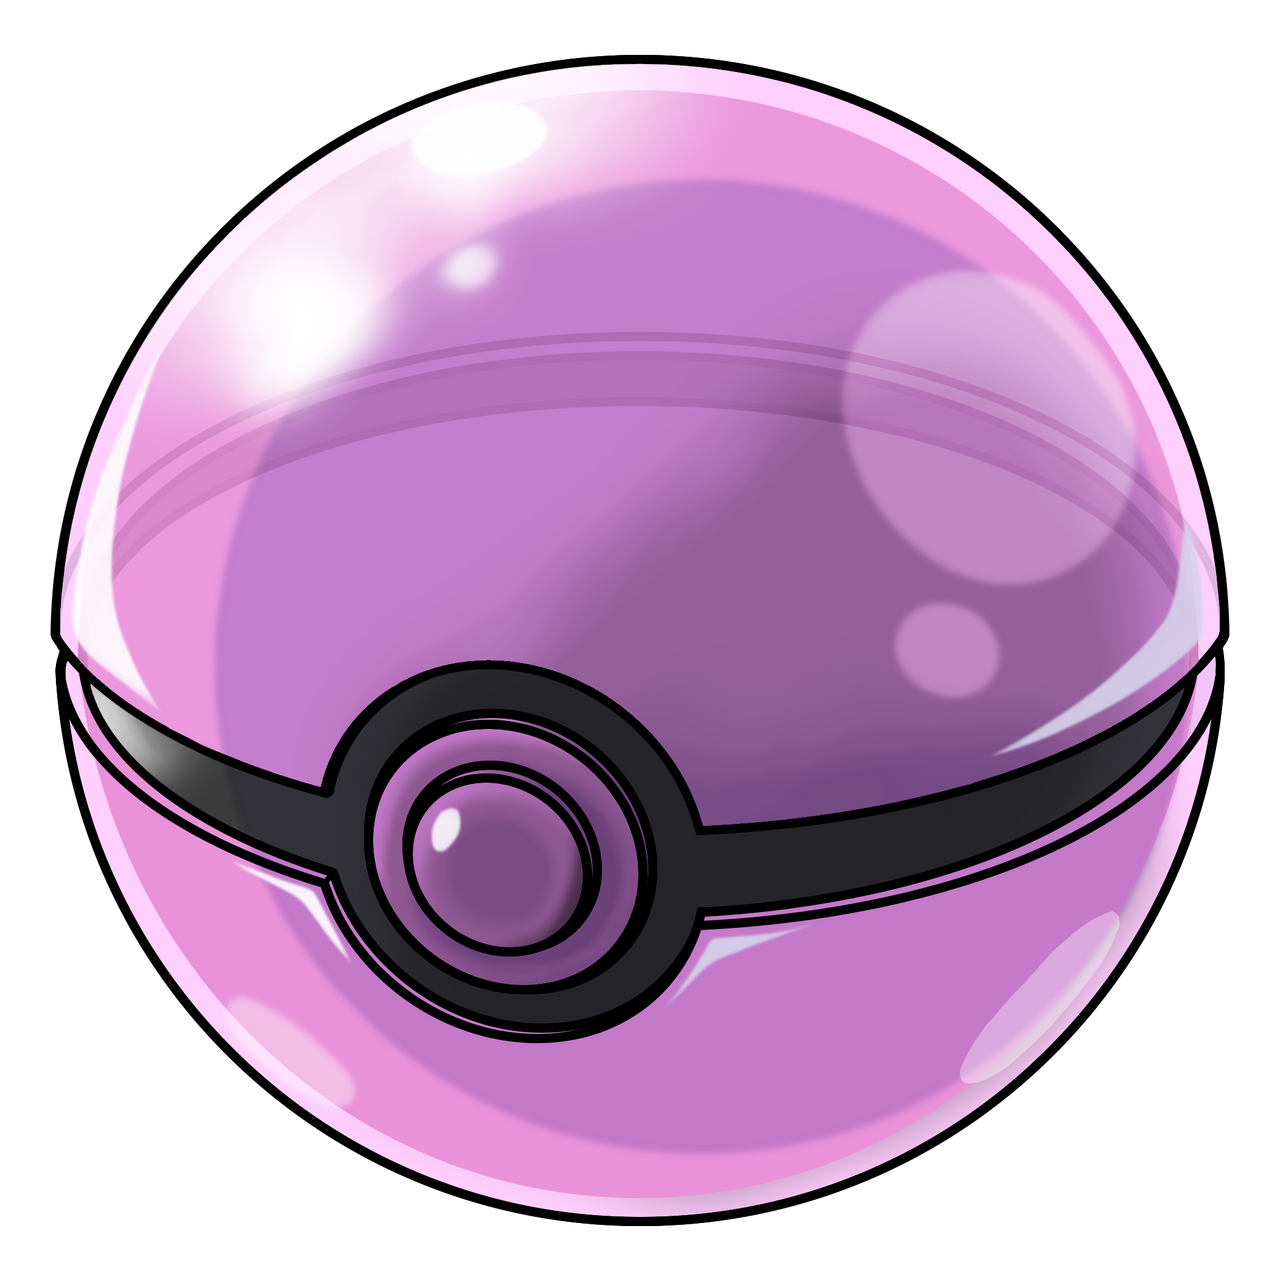 Pixilart - Pokemon Ball by Dolphin6